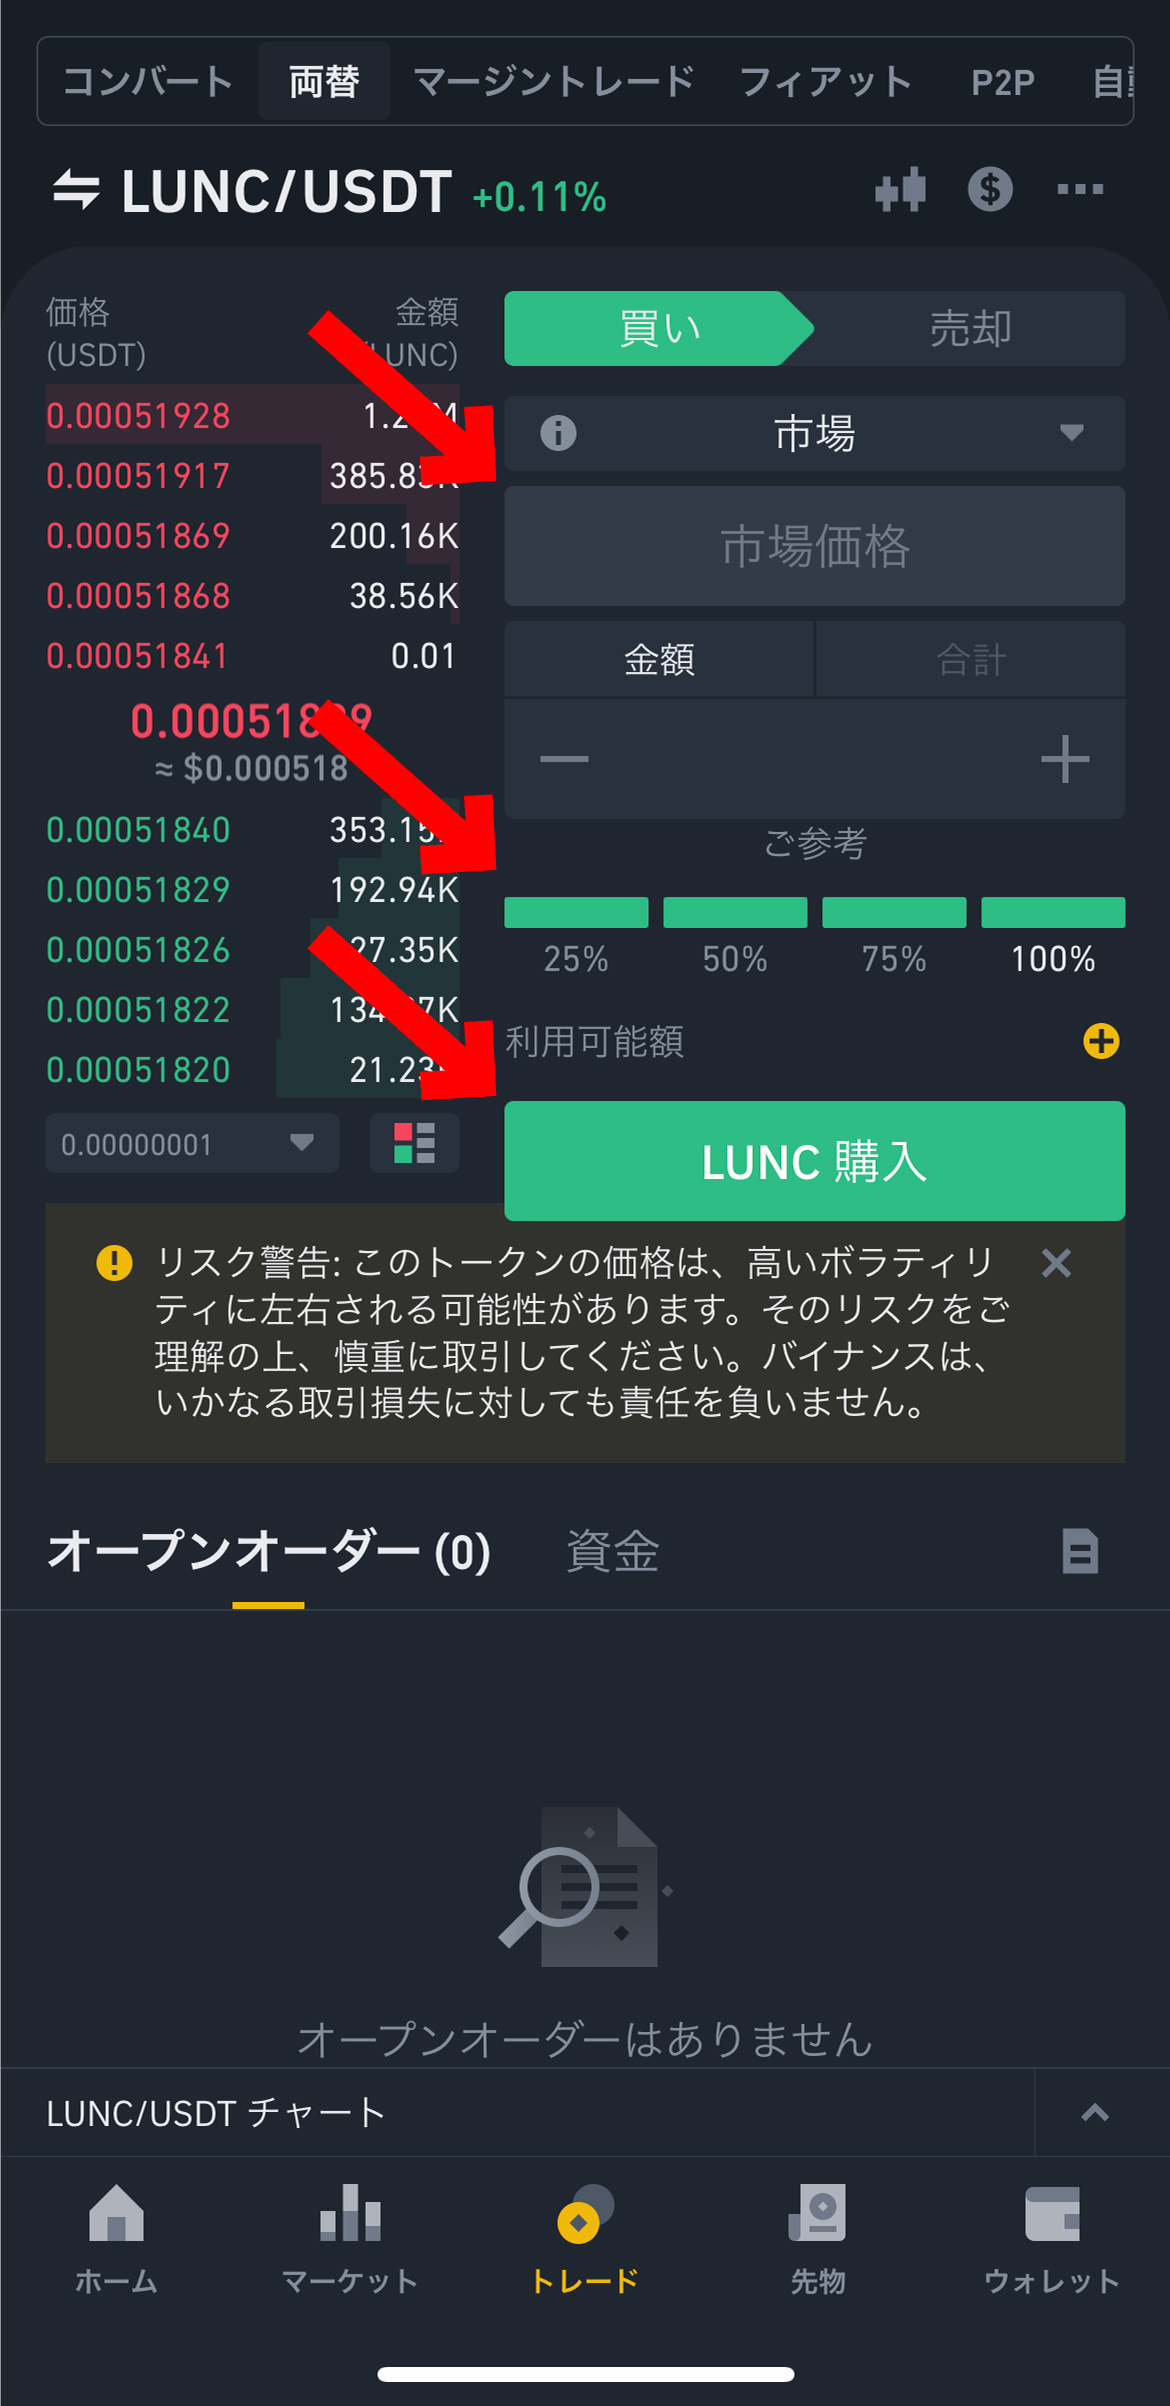 BINANCEの登録方法から仮想通貨購入まで【スマホで簡単】LUNC 購入をクリックします。